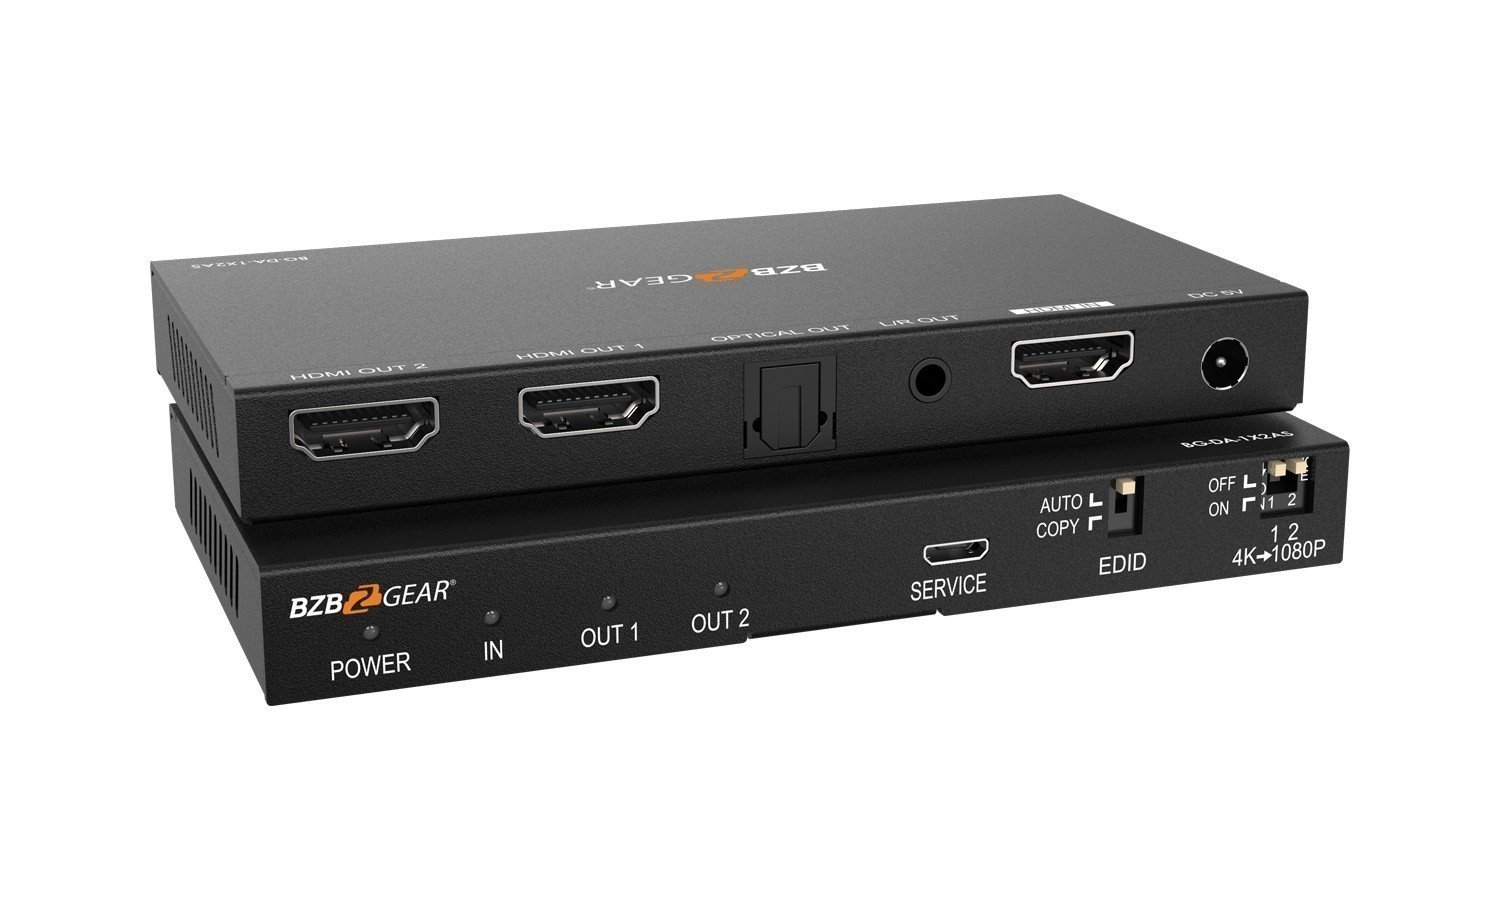 2-Port HDMI Splitter (1x2) - 4K 60Hz UHD HDMI 2.0 Audio Video Splitter w/  Scaler & Audio Extractor (3.5mm/SPDIF) - Dual HDMI Splitter (1-In 2-Out) 